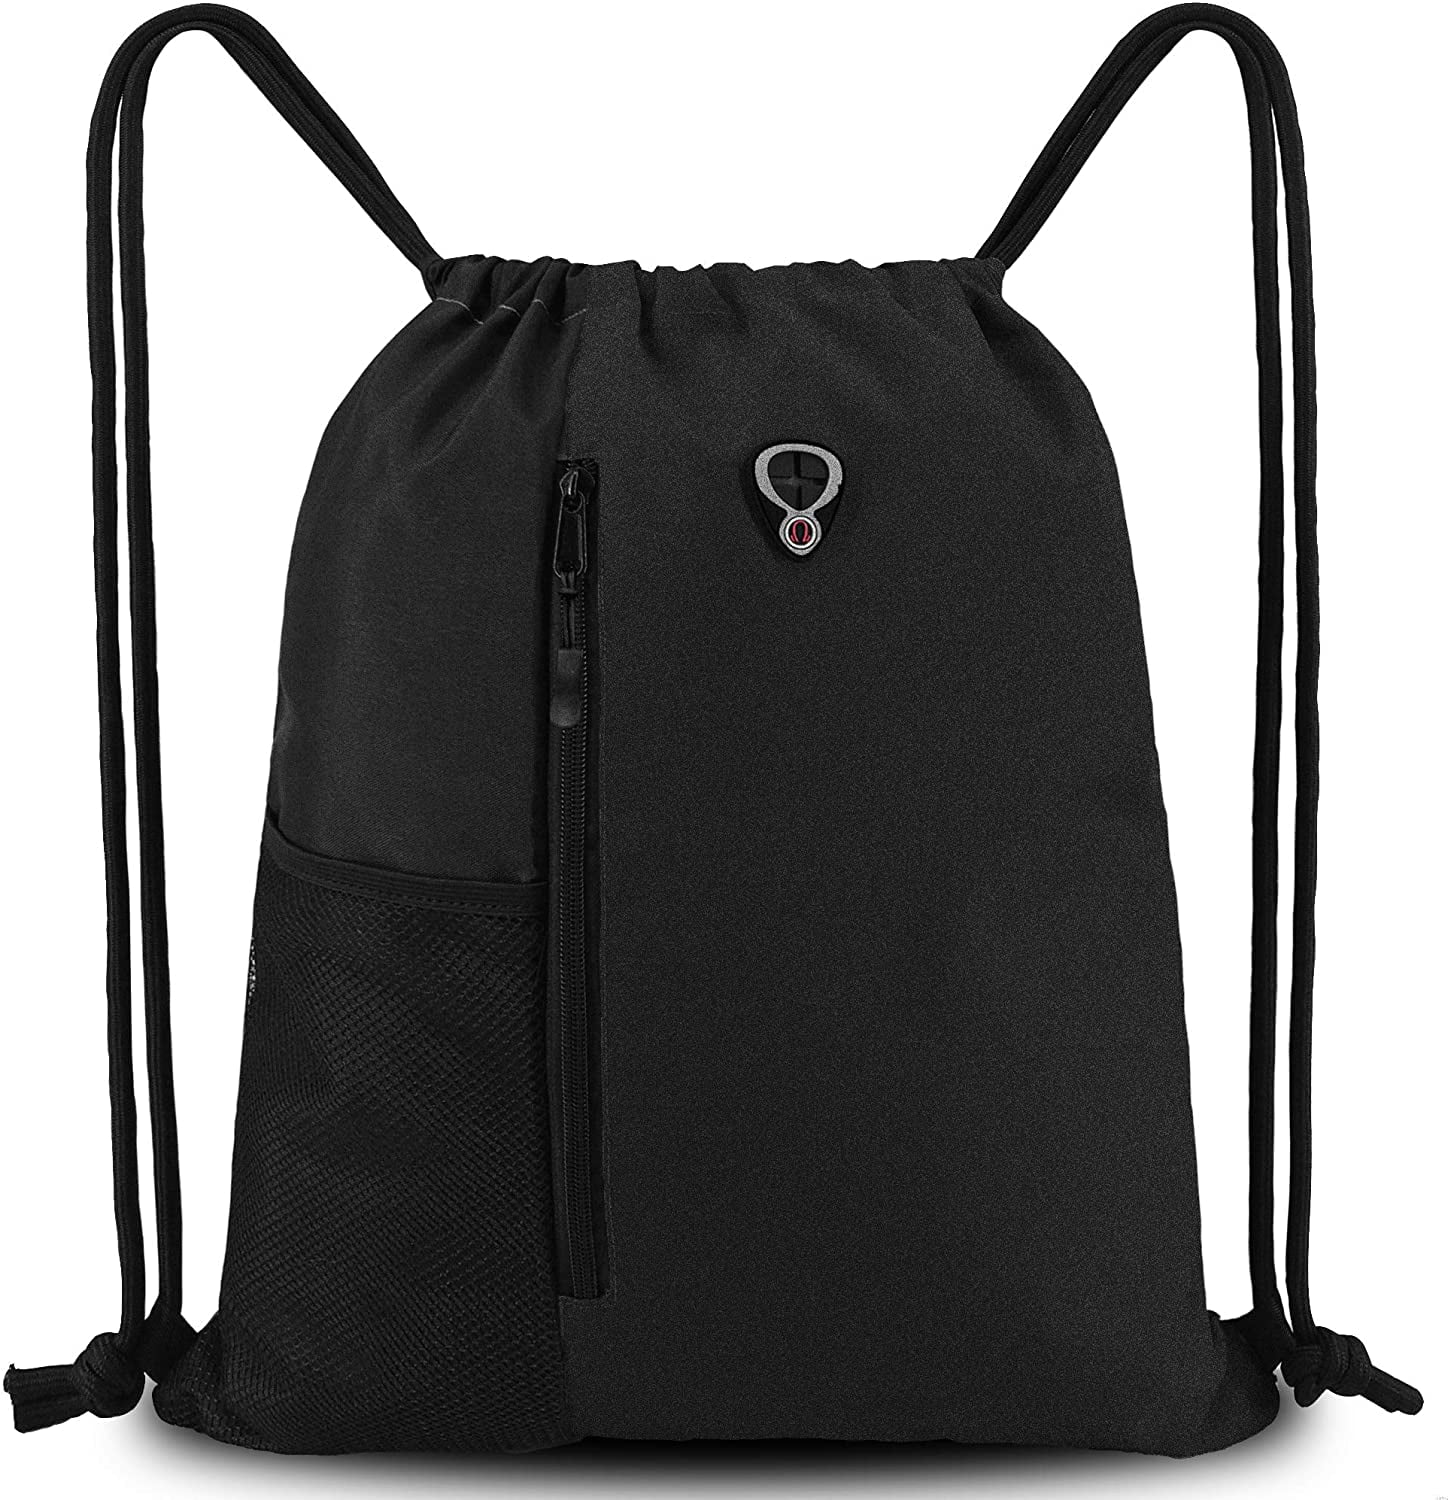 Drawstring Backpack For University Athletic Teams Fans Gym Bag String Gym Sack Sports Beach Children Sackpack